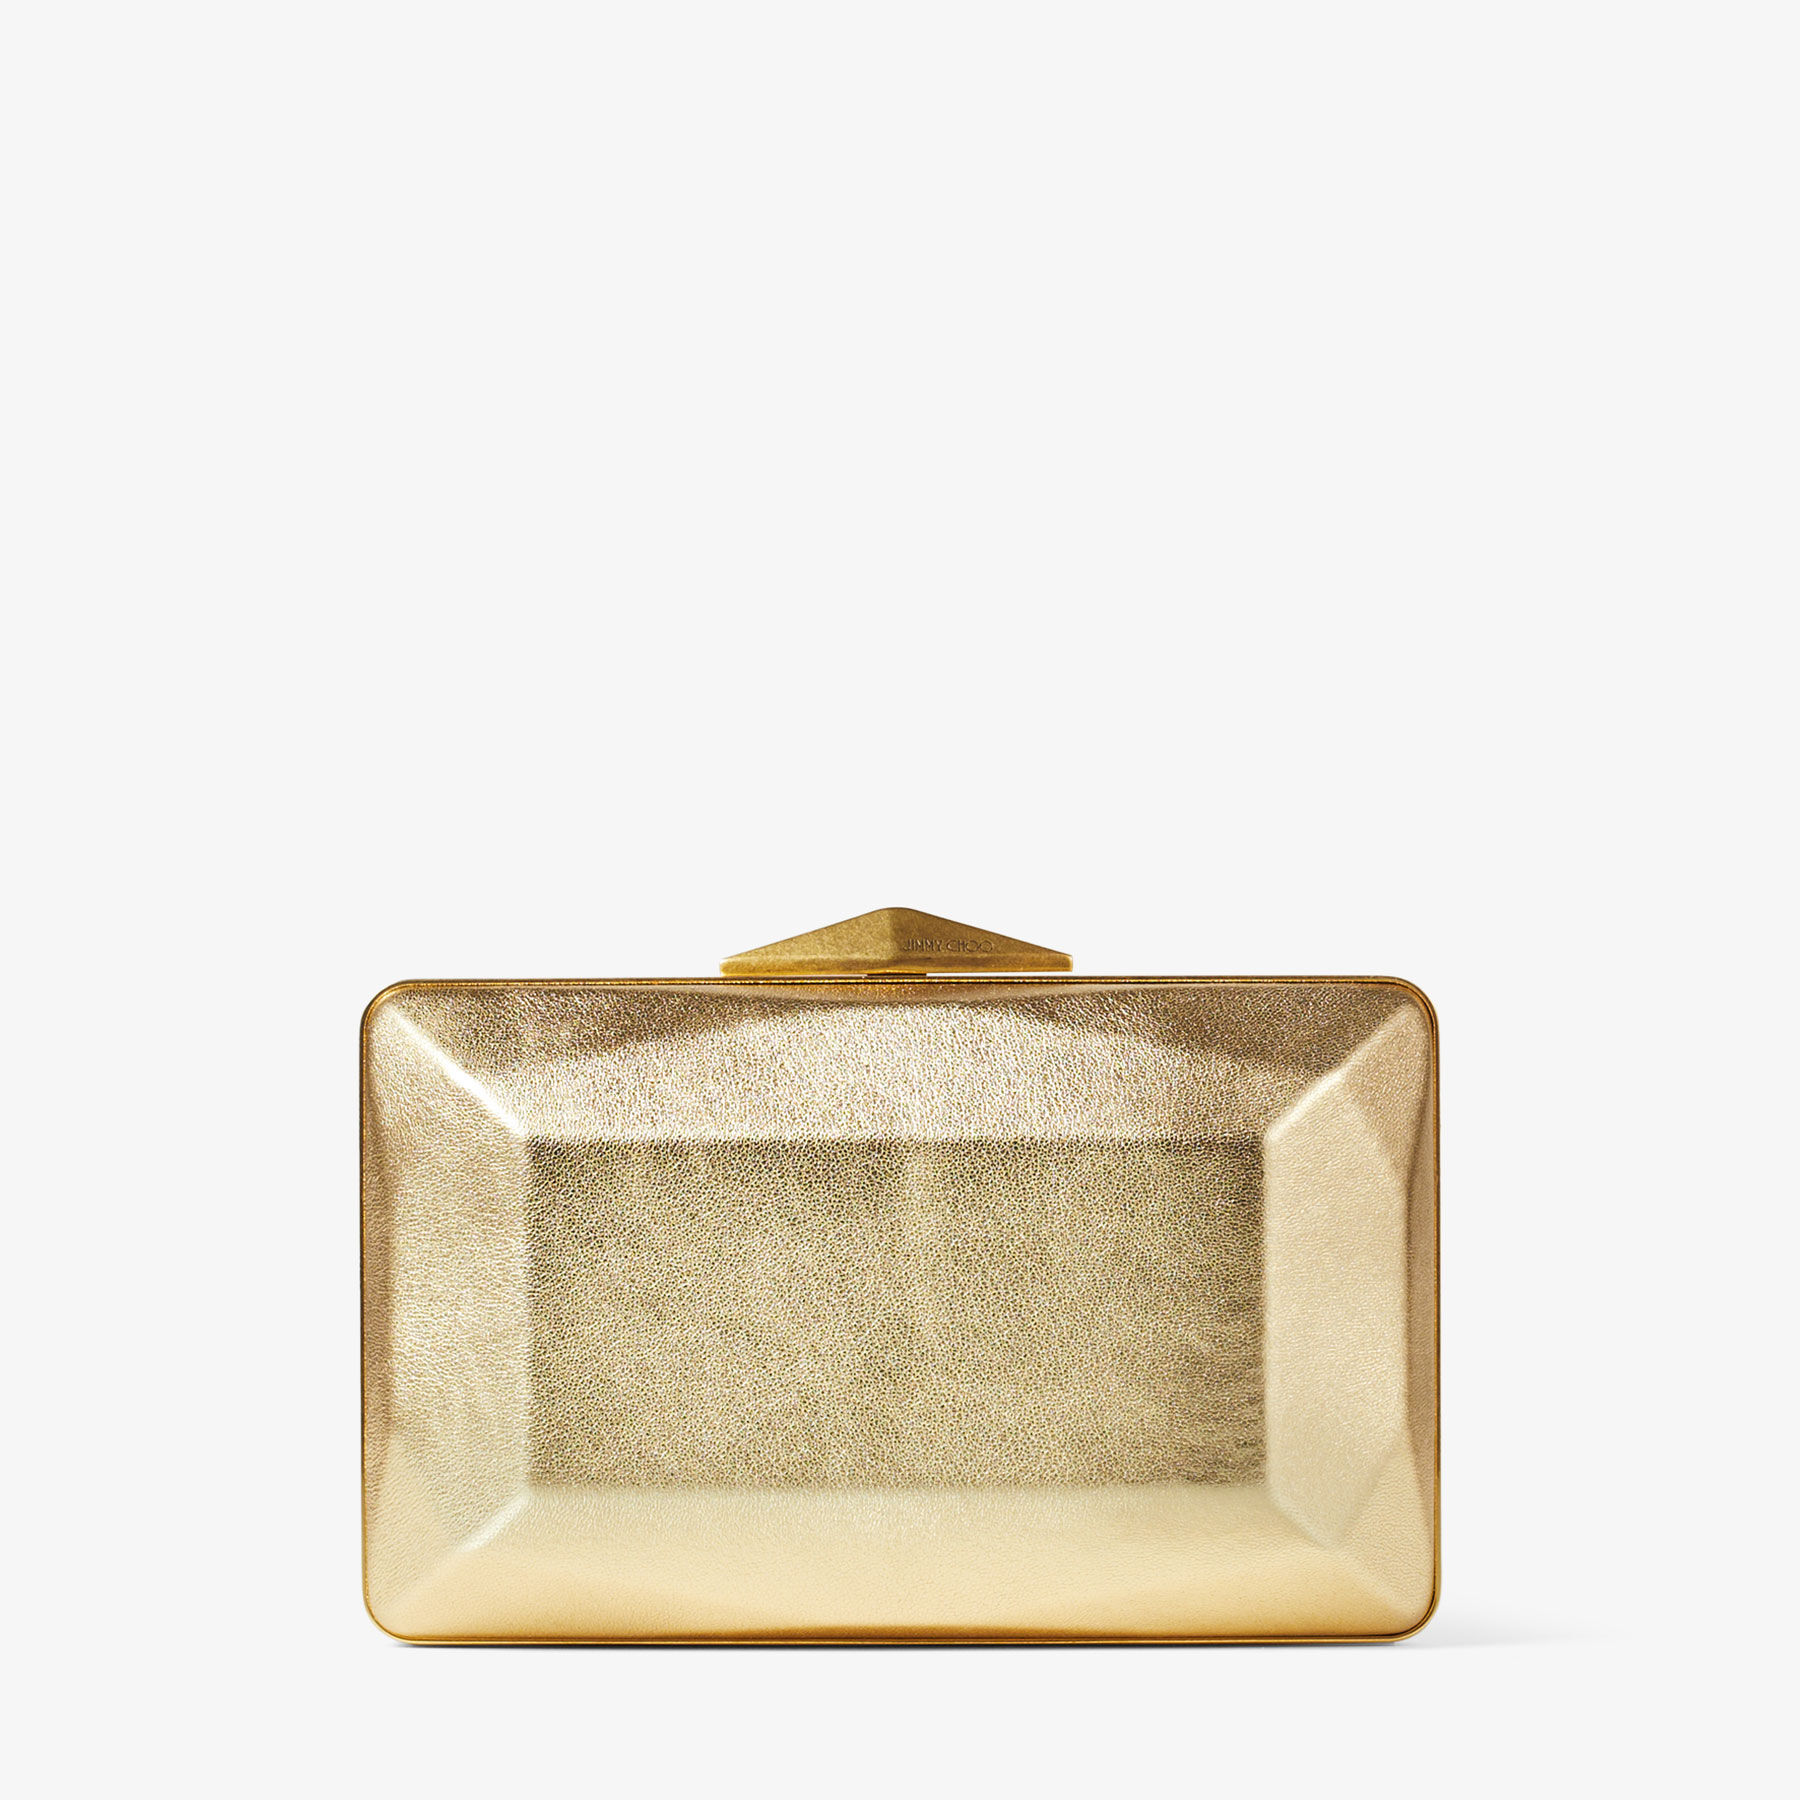 DIAMOND BOX CLUTCH  Gold Metallic Nappa Leather Box Clutch Bag